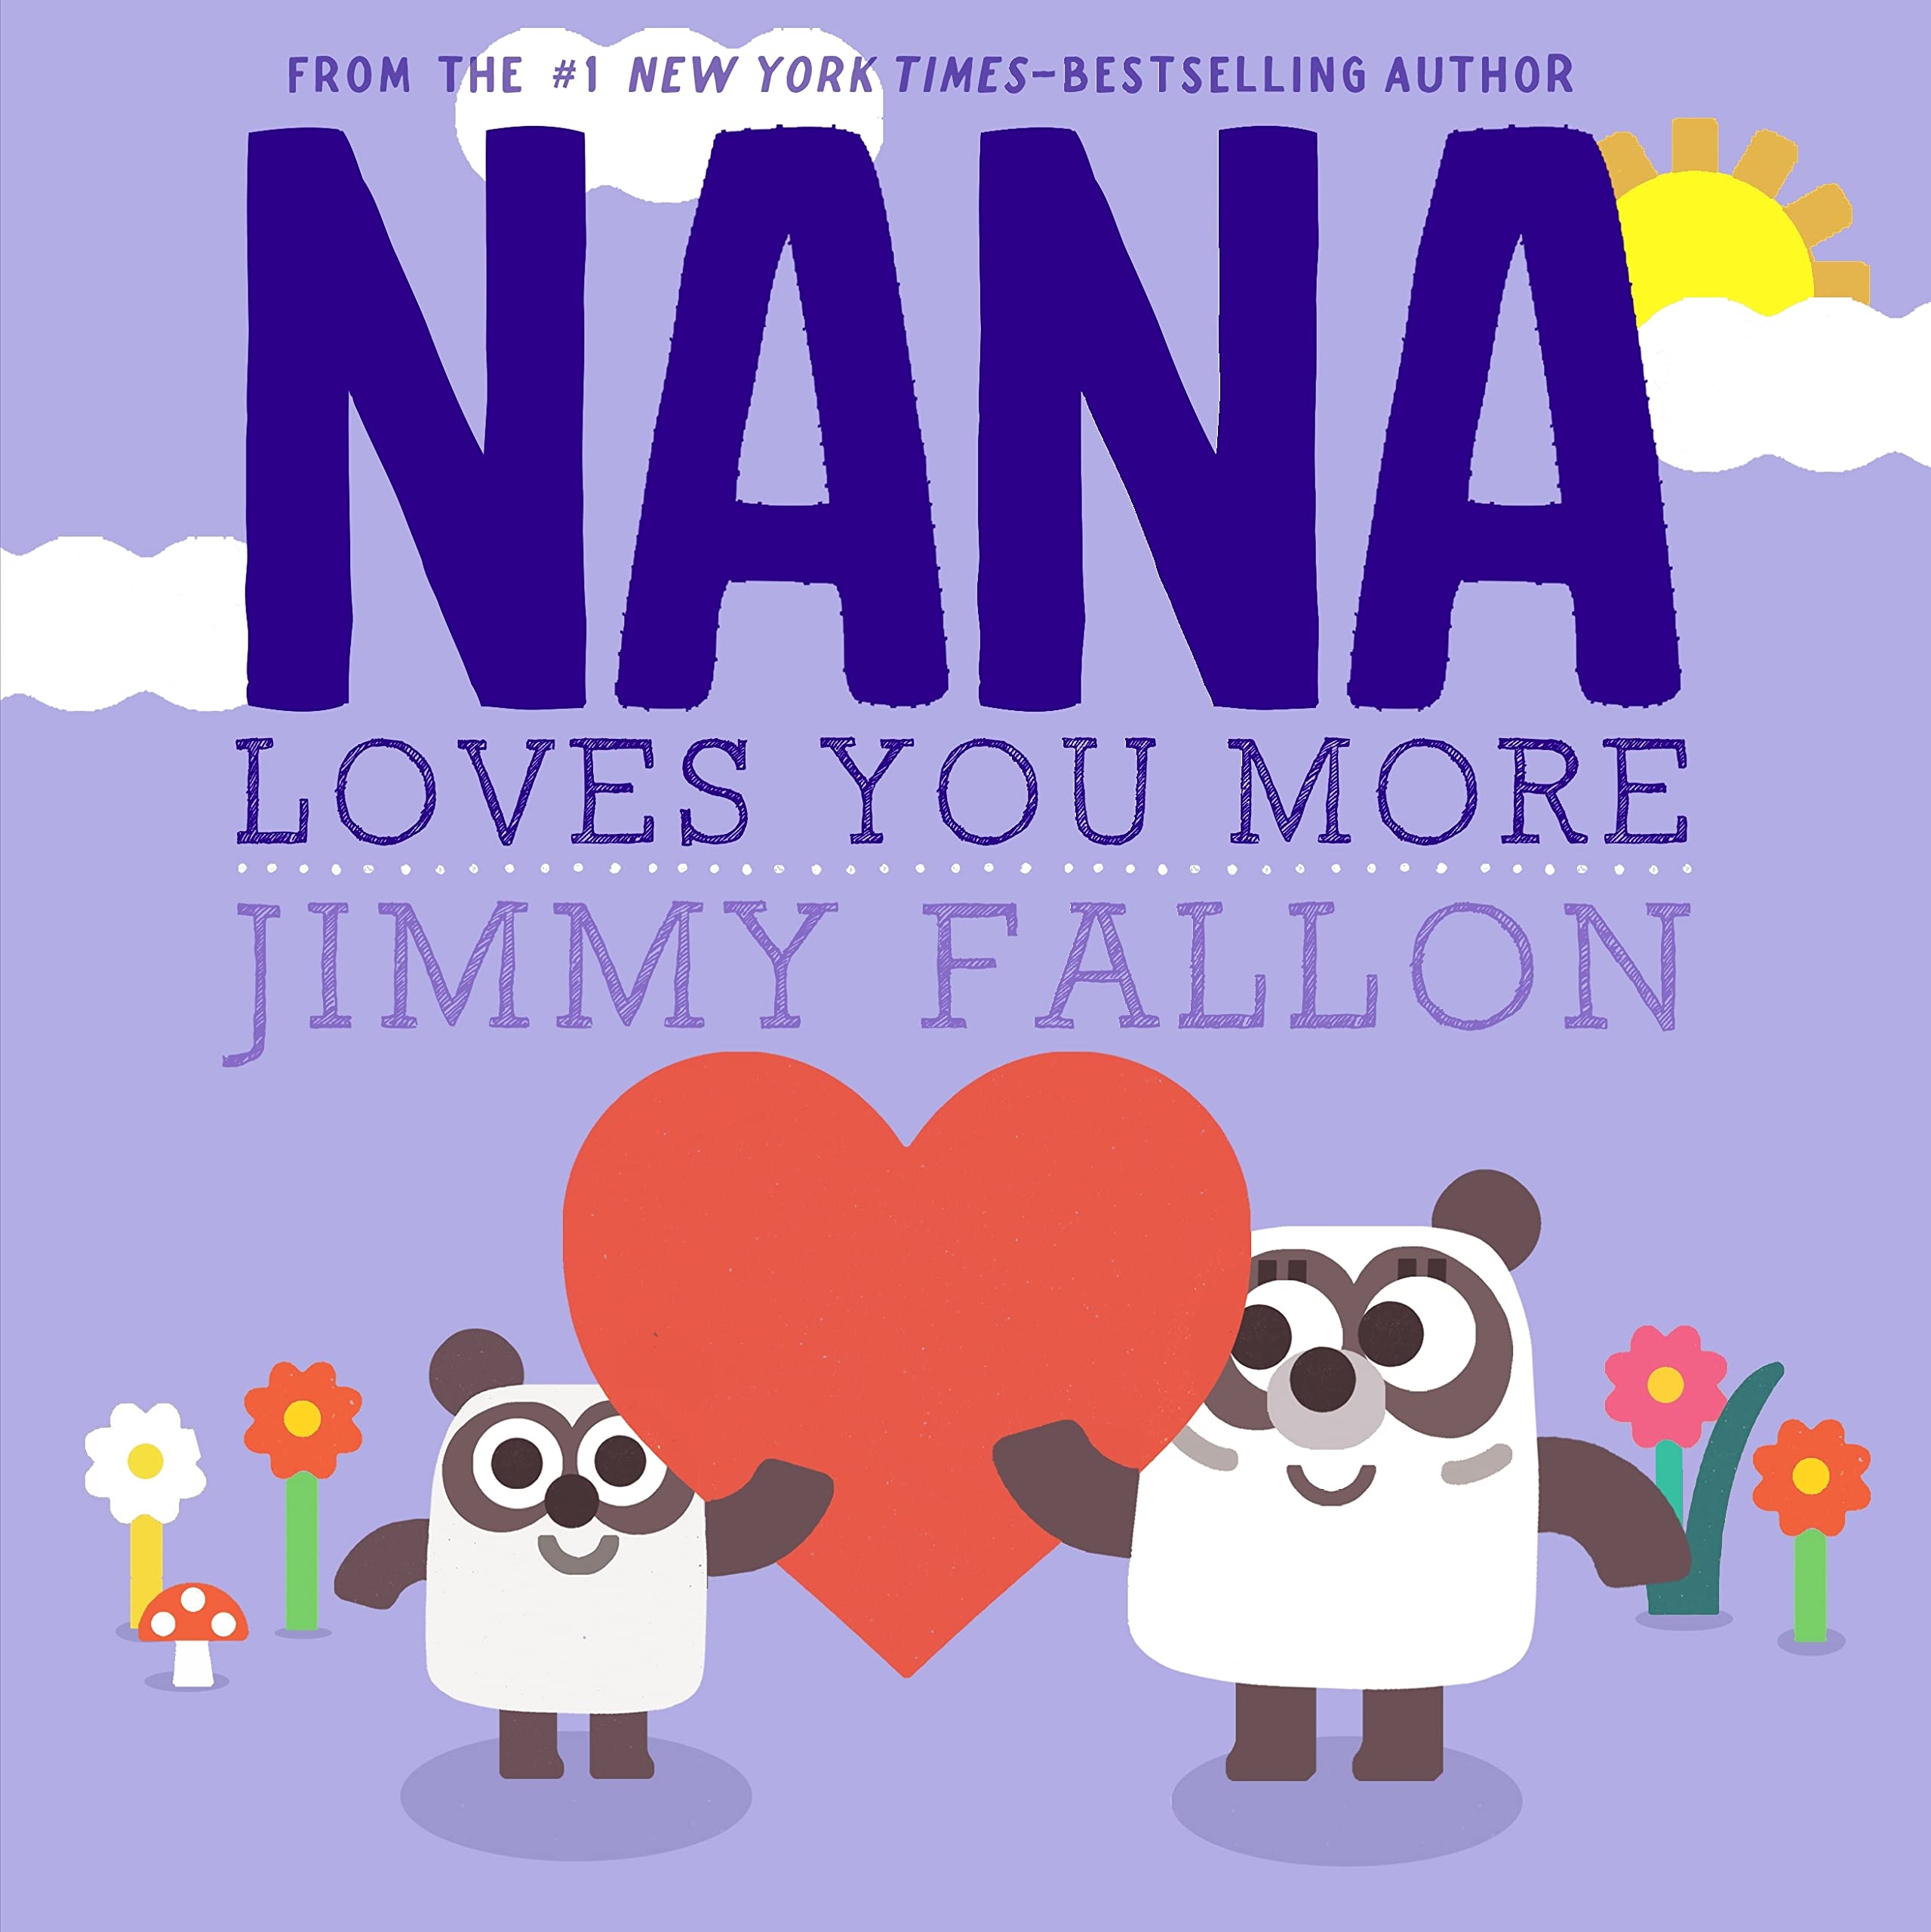 Image for "Nana Loves You More"